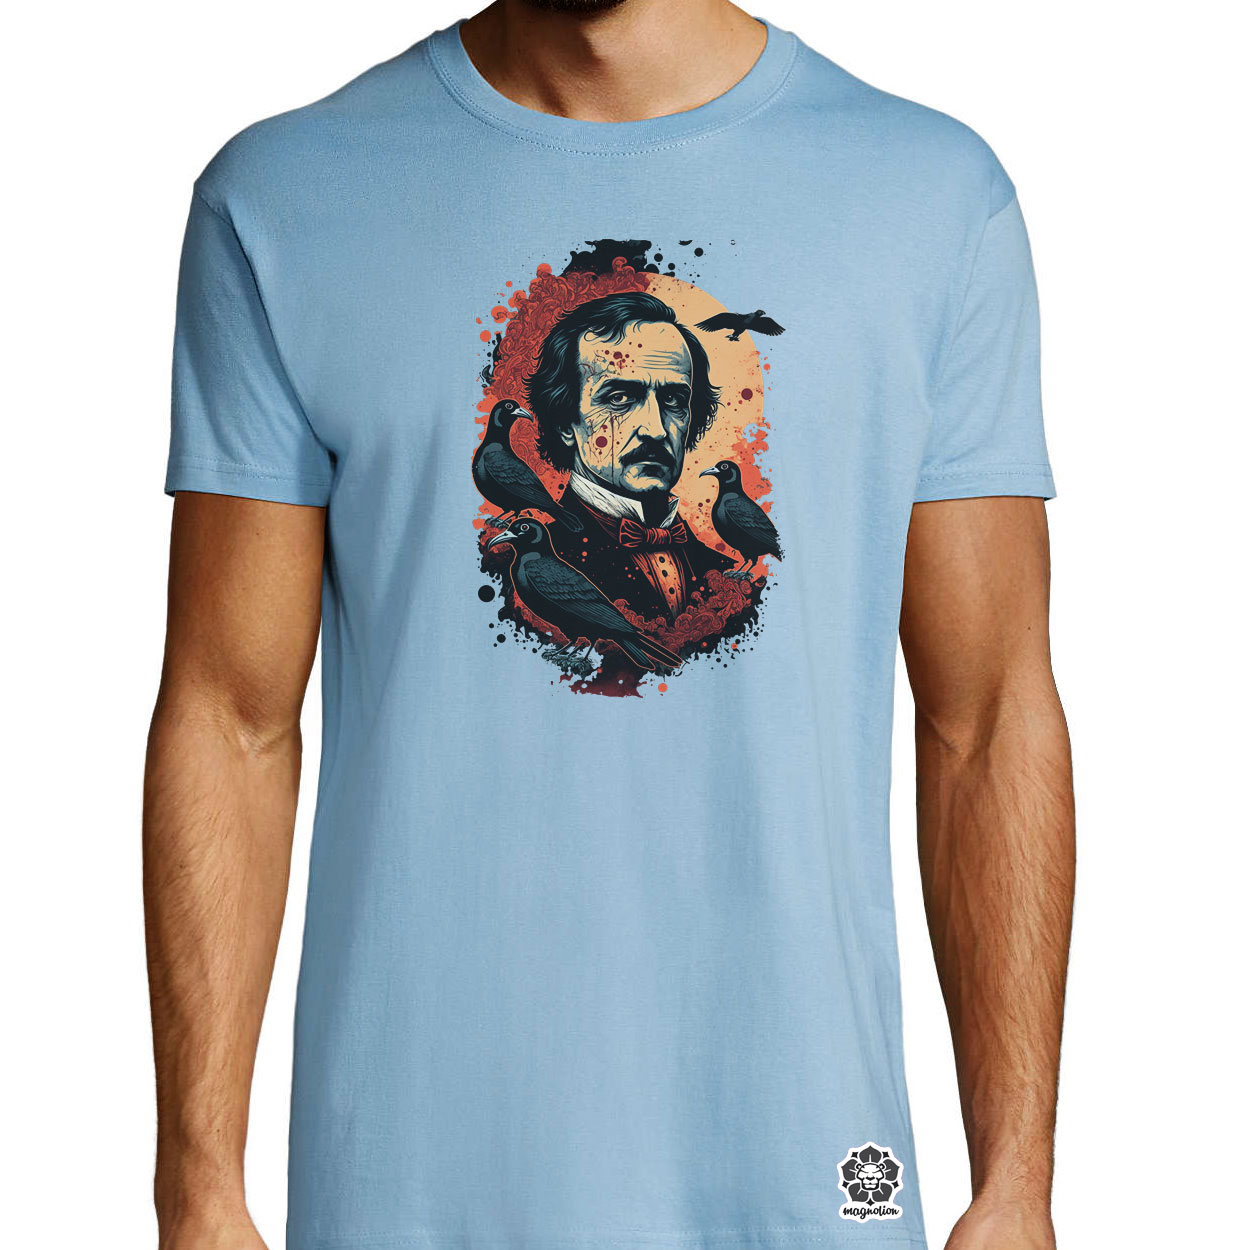 Edgar Allan Poe portré v2